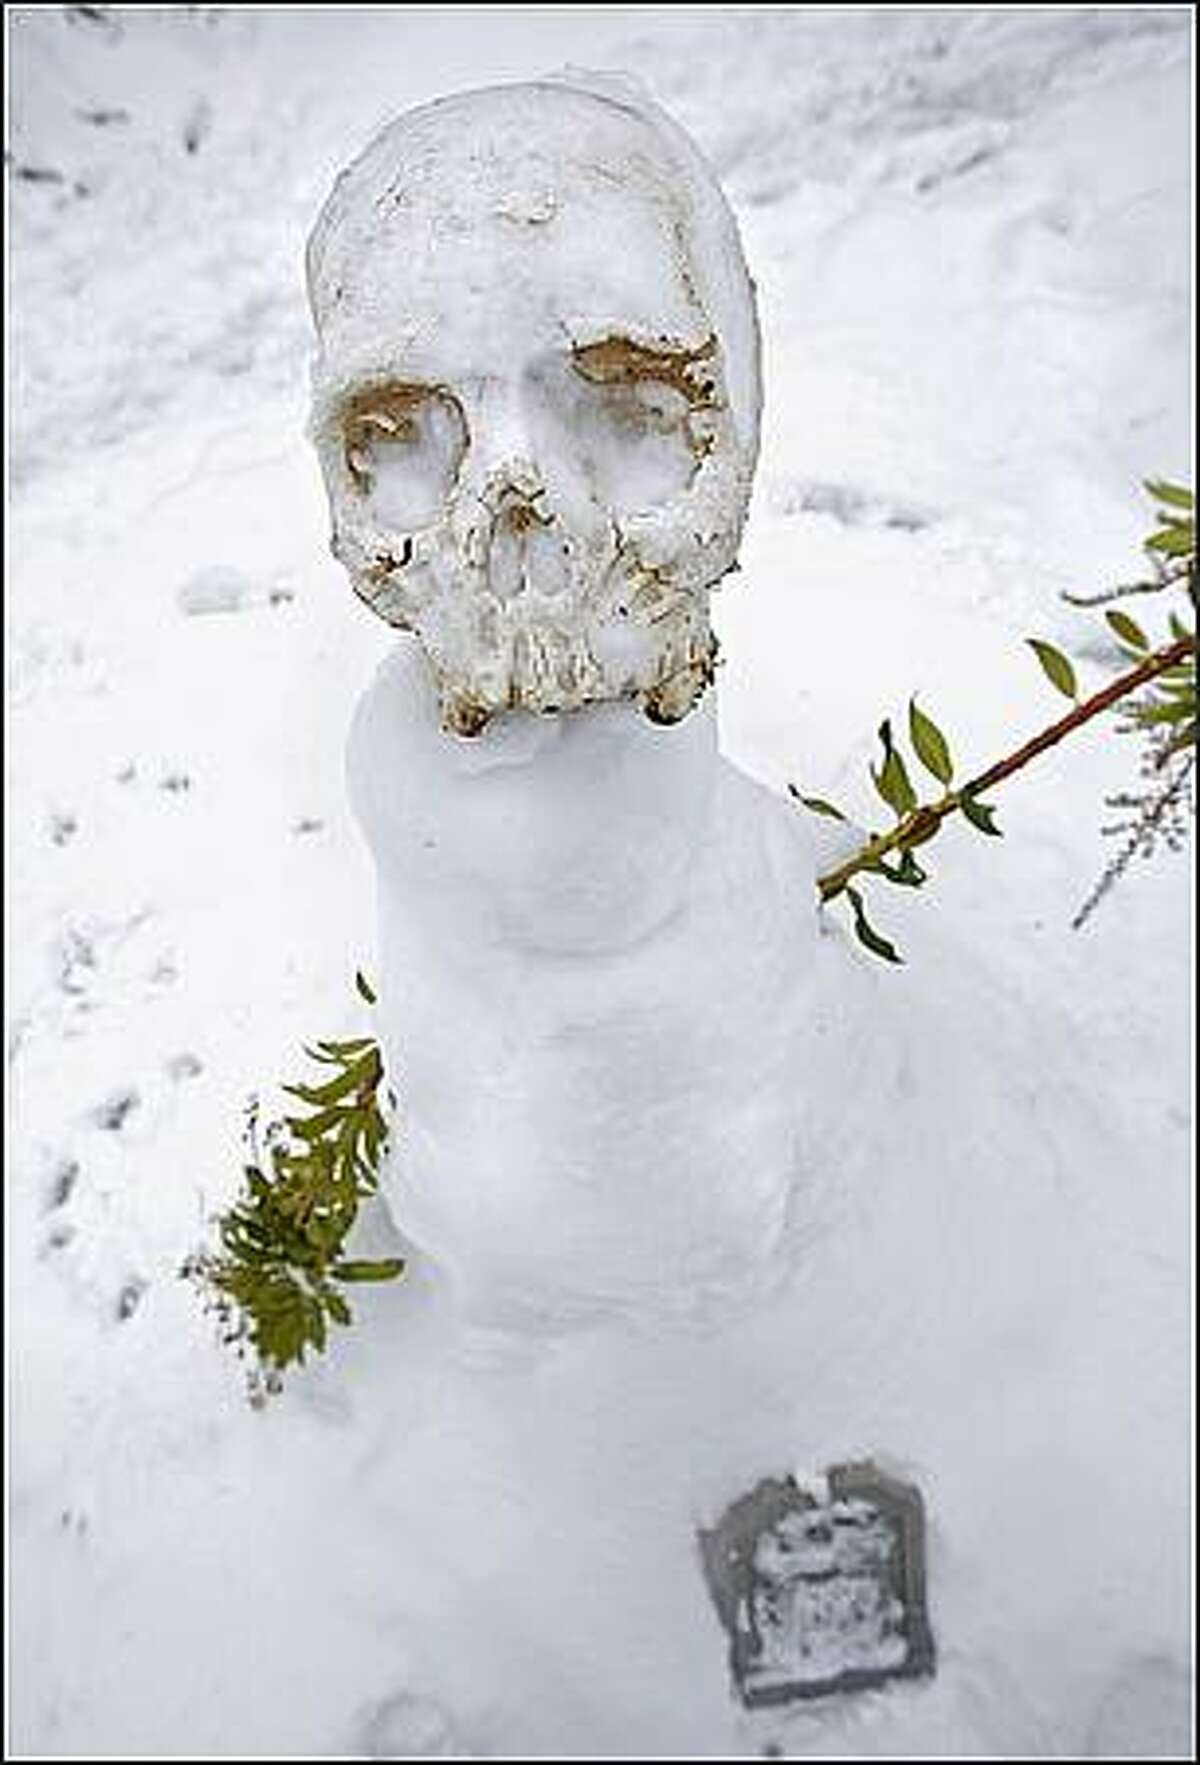 A skull finds new life as a snowman's head in Ballard. Dec. 23, 2008.